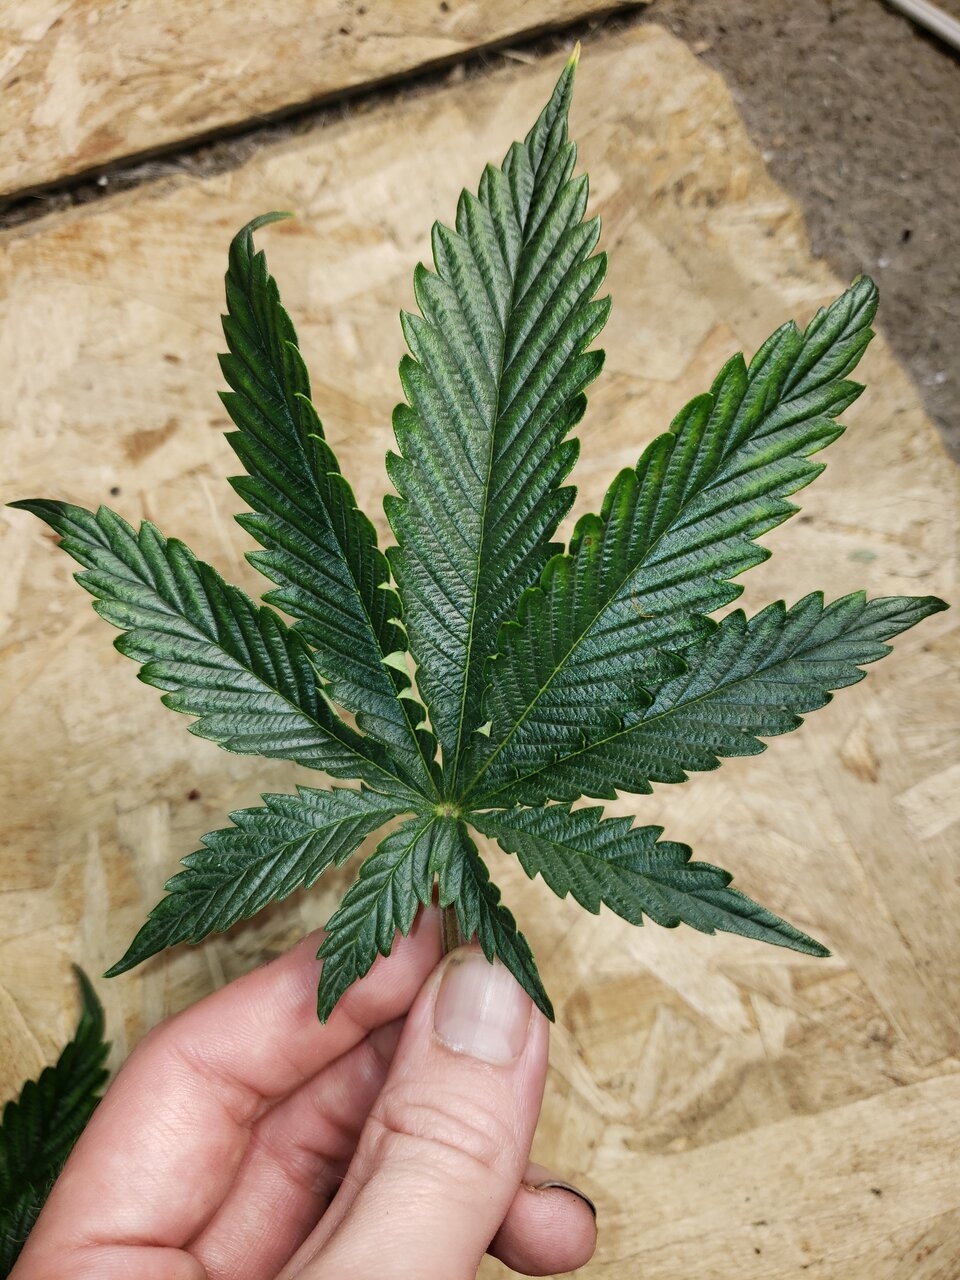 HB Bubba Island Kush leaf looks like a fake haha